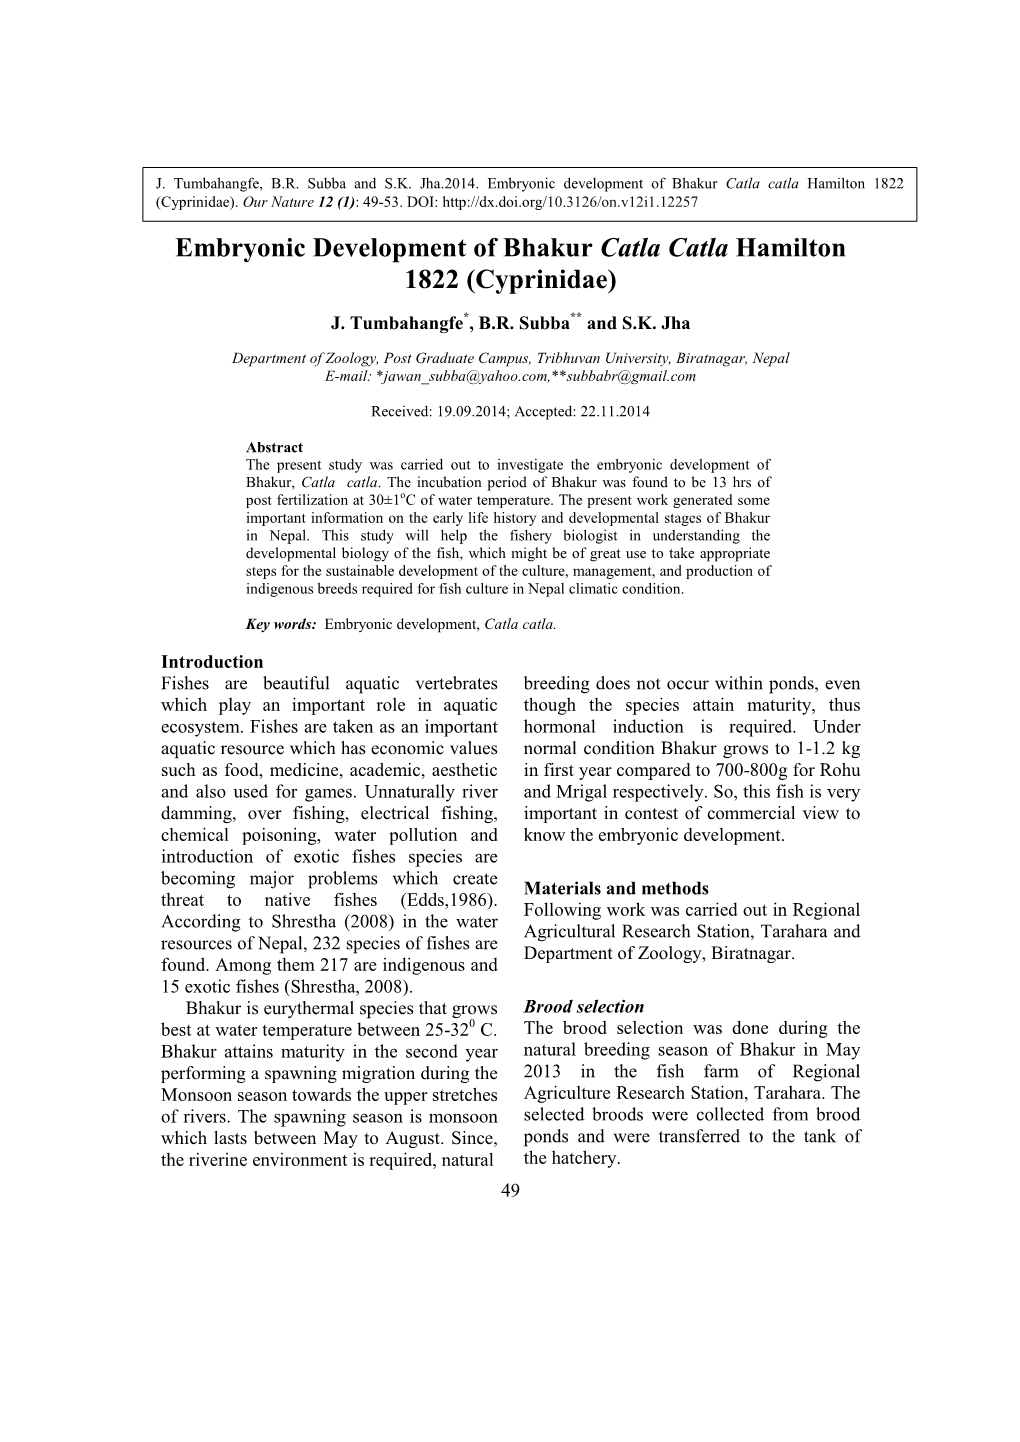 Embryonic Development of Bhakur Catla Catla Hamilton 1822 (Cyprinidae)